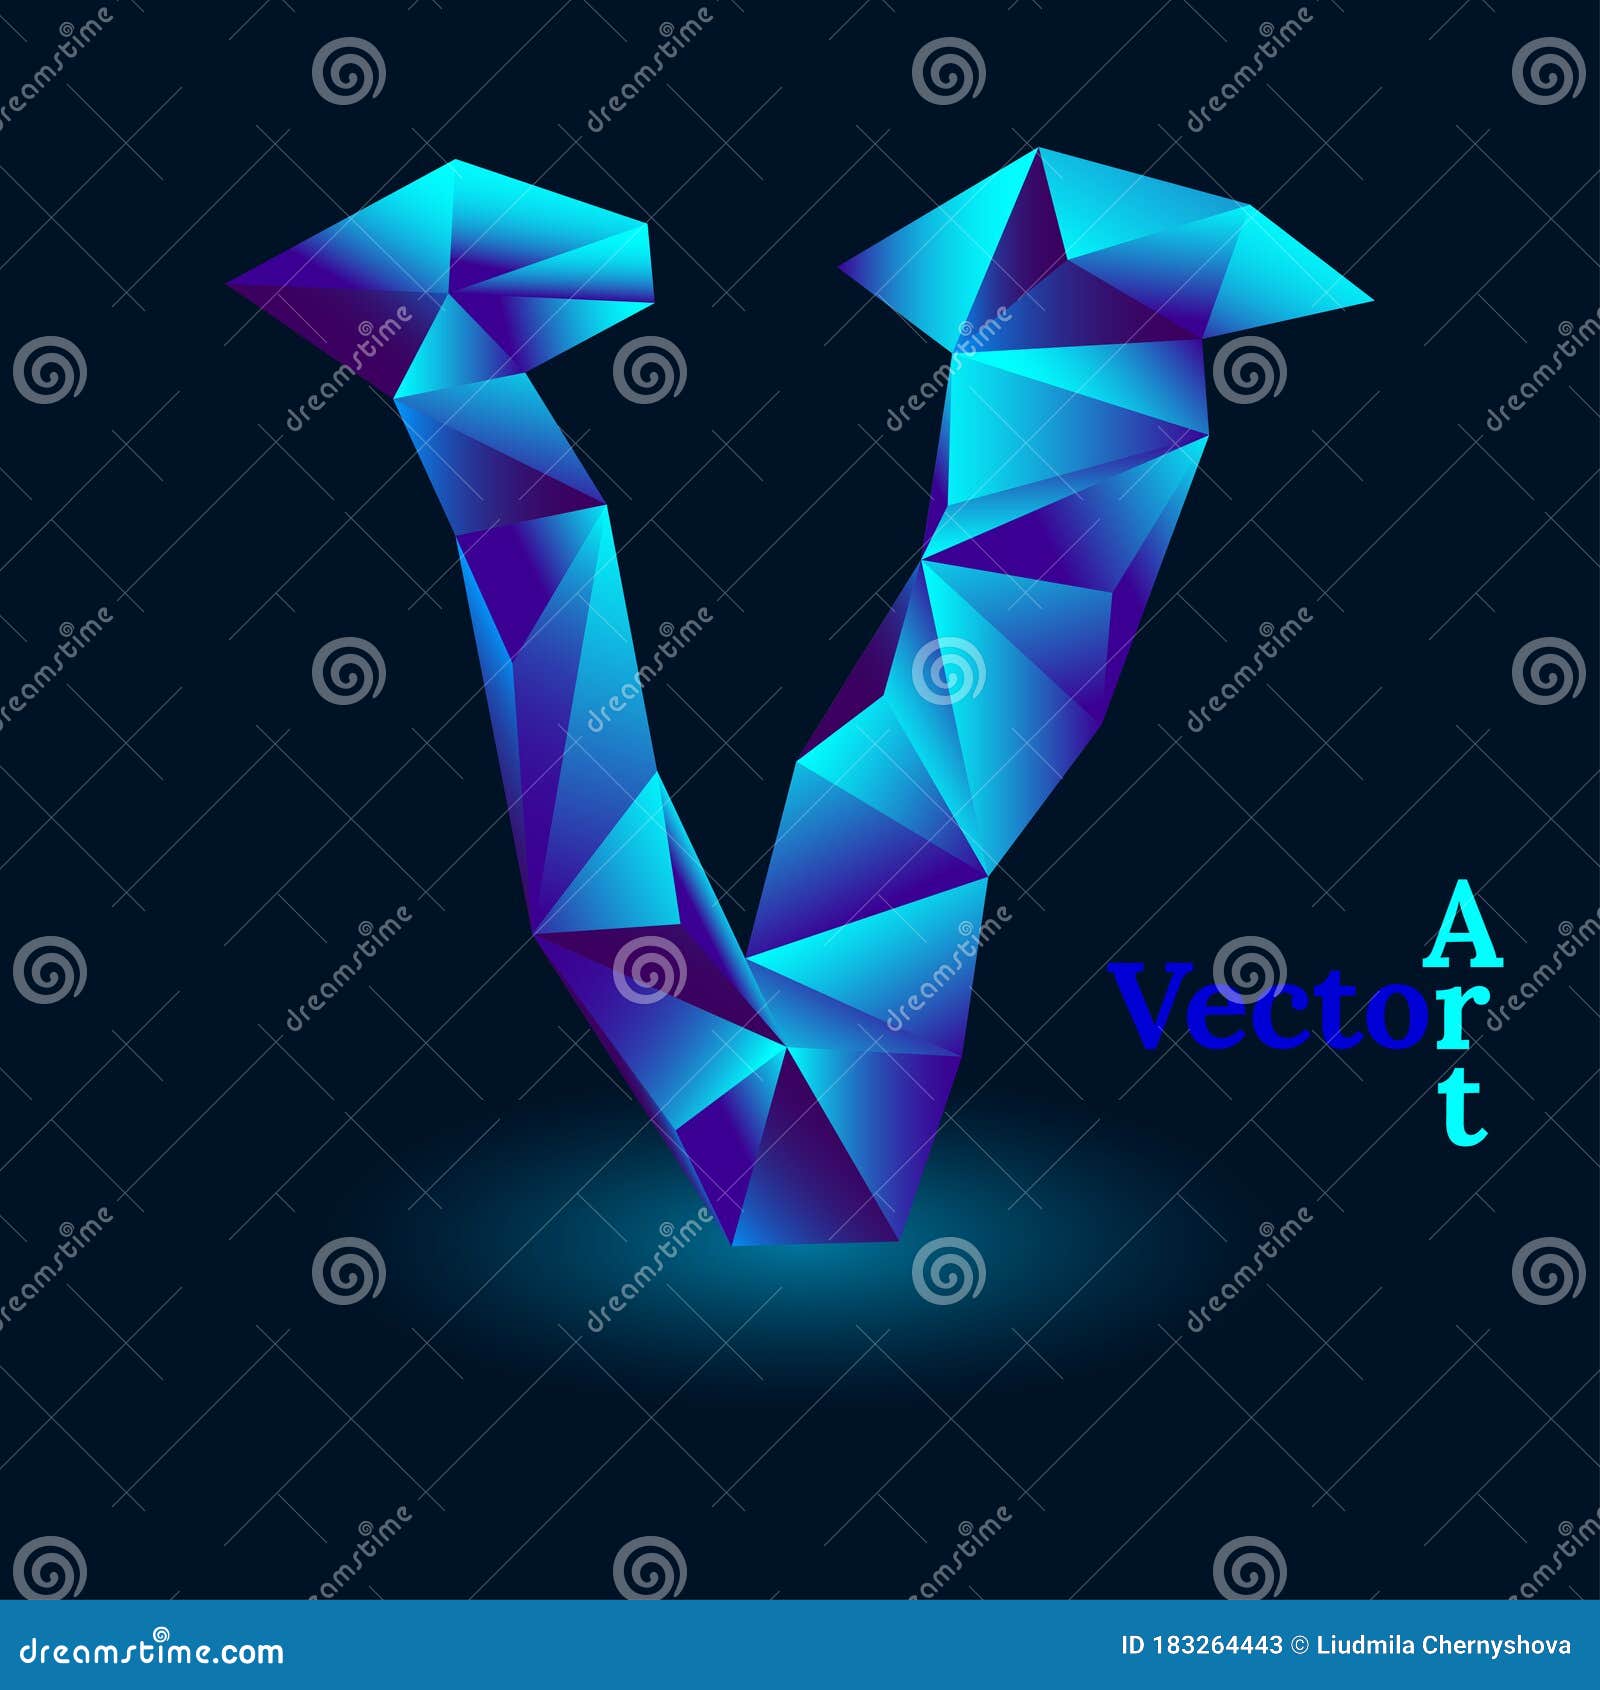 Triangles Mosaic Pattern Letter V Bright Neon Blue Gradient On Dark Background Vector Illustration In Art Abstraction Style Stock Vector Illustration Of Dark Card